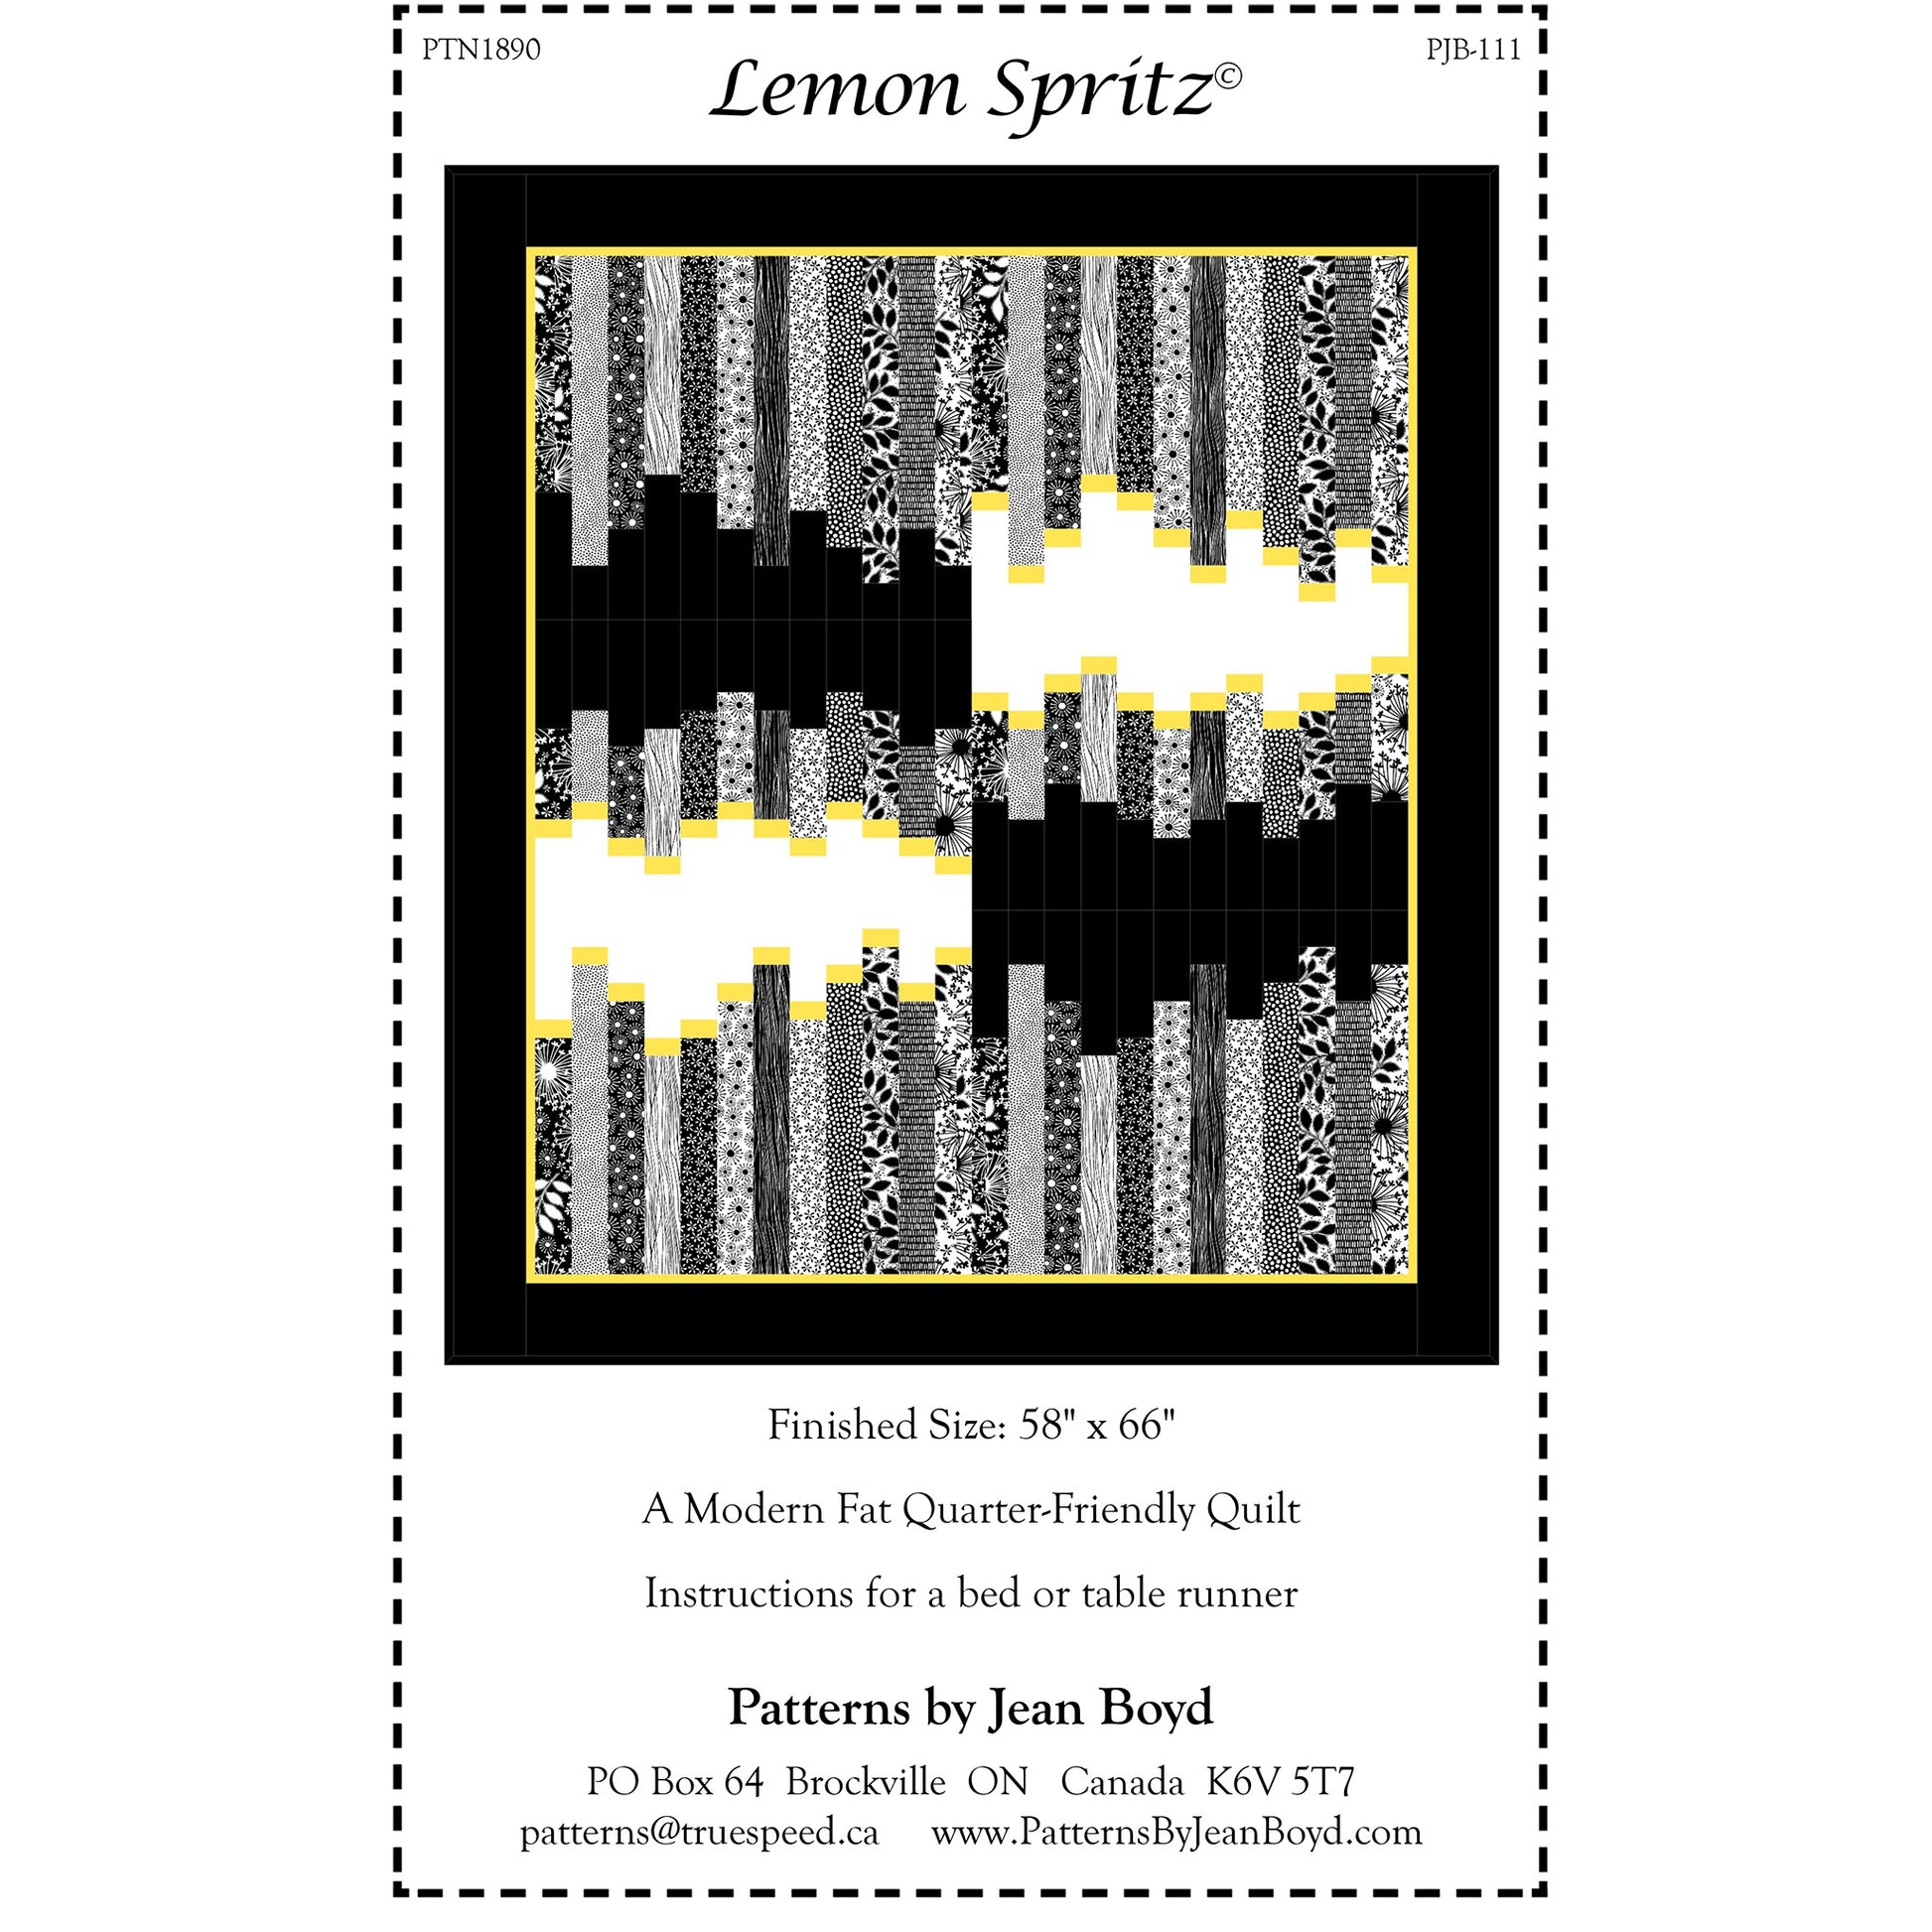 Cover image of pattern for Lemon Spritz Quilt.